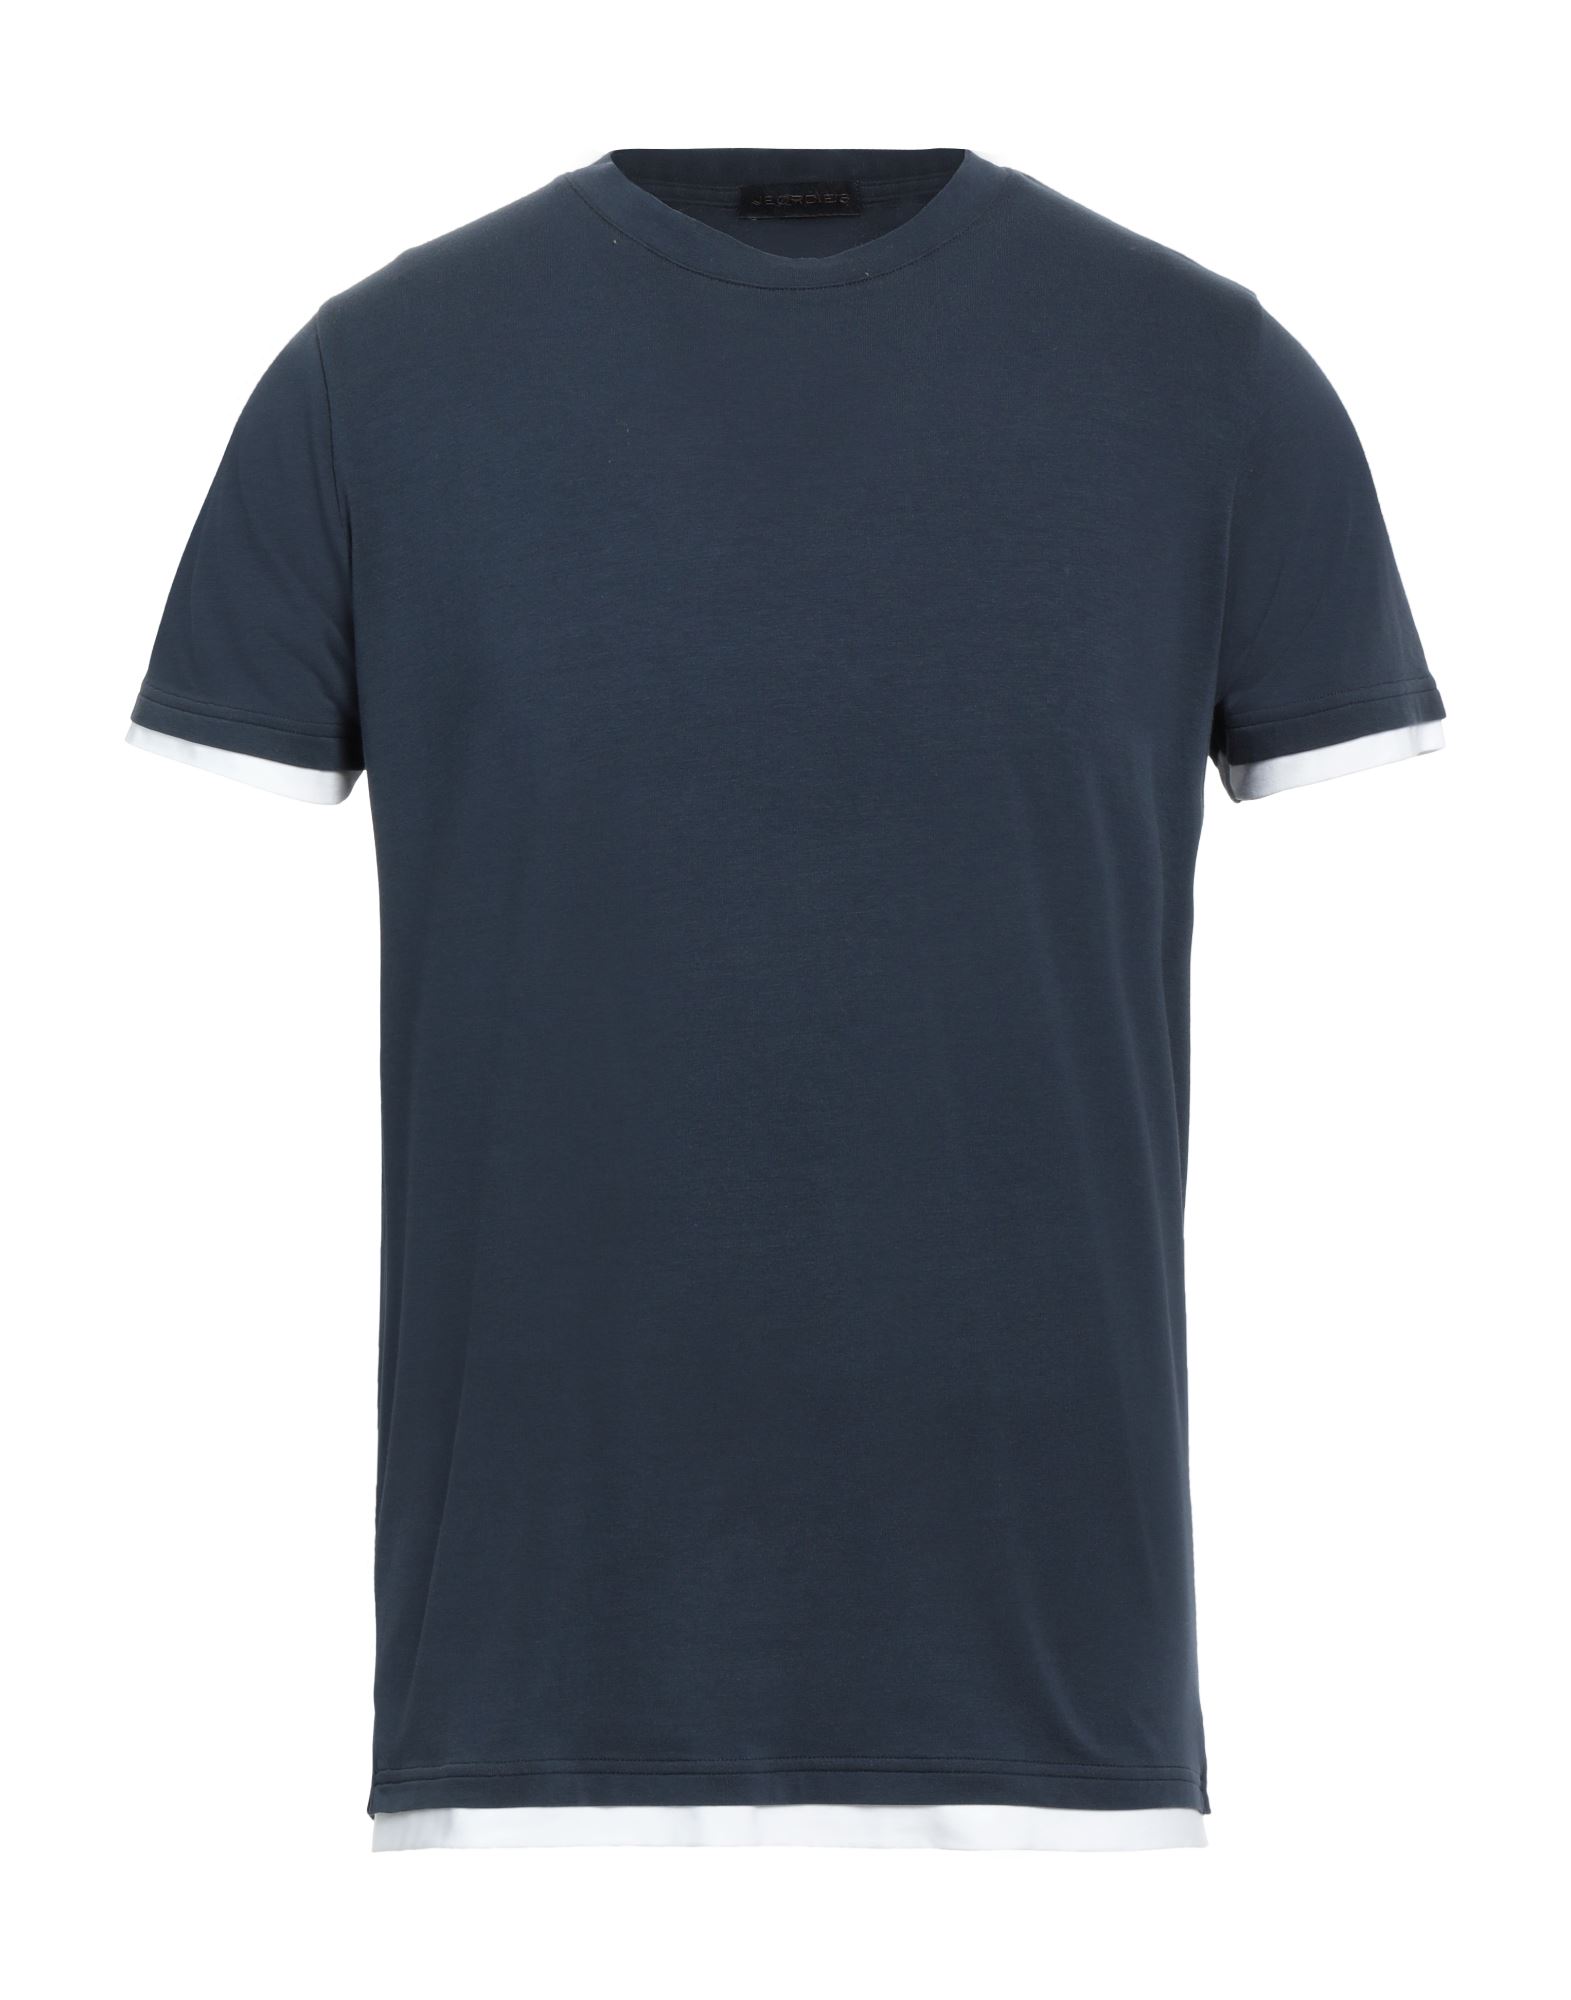 Jeordie's Man T-shirt Navy Blue Size 3xl Cotton, Elastane